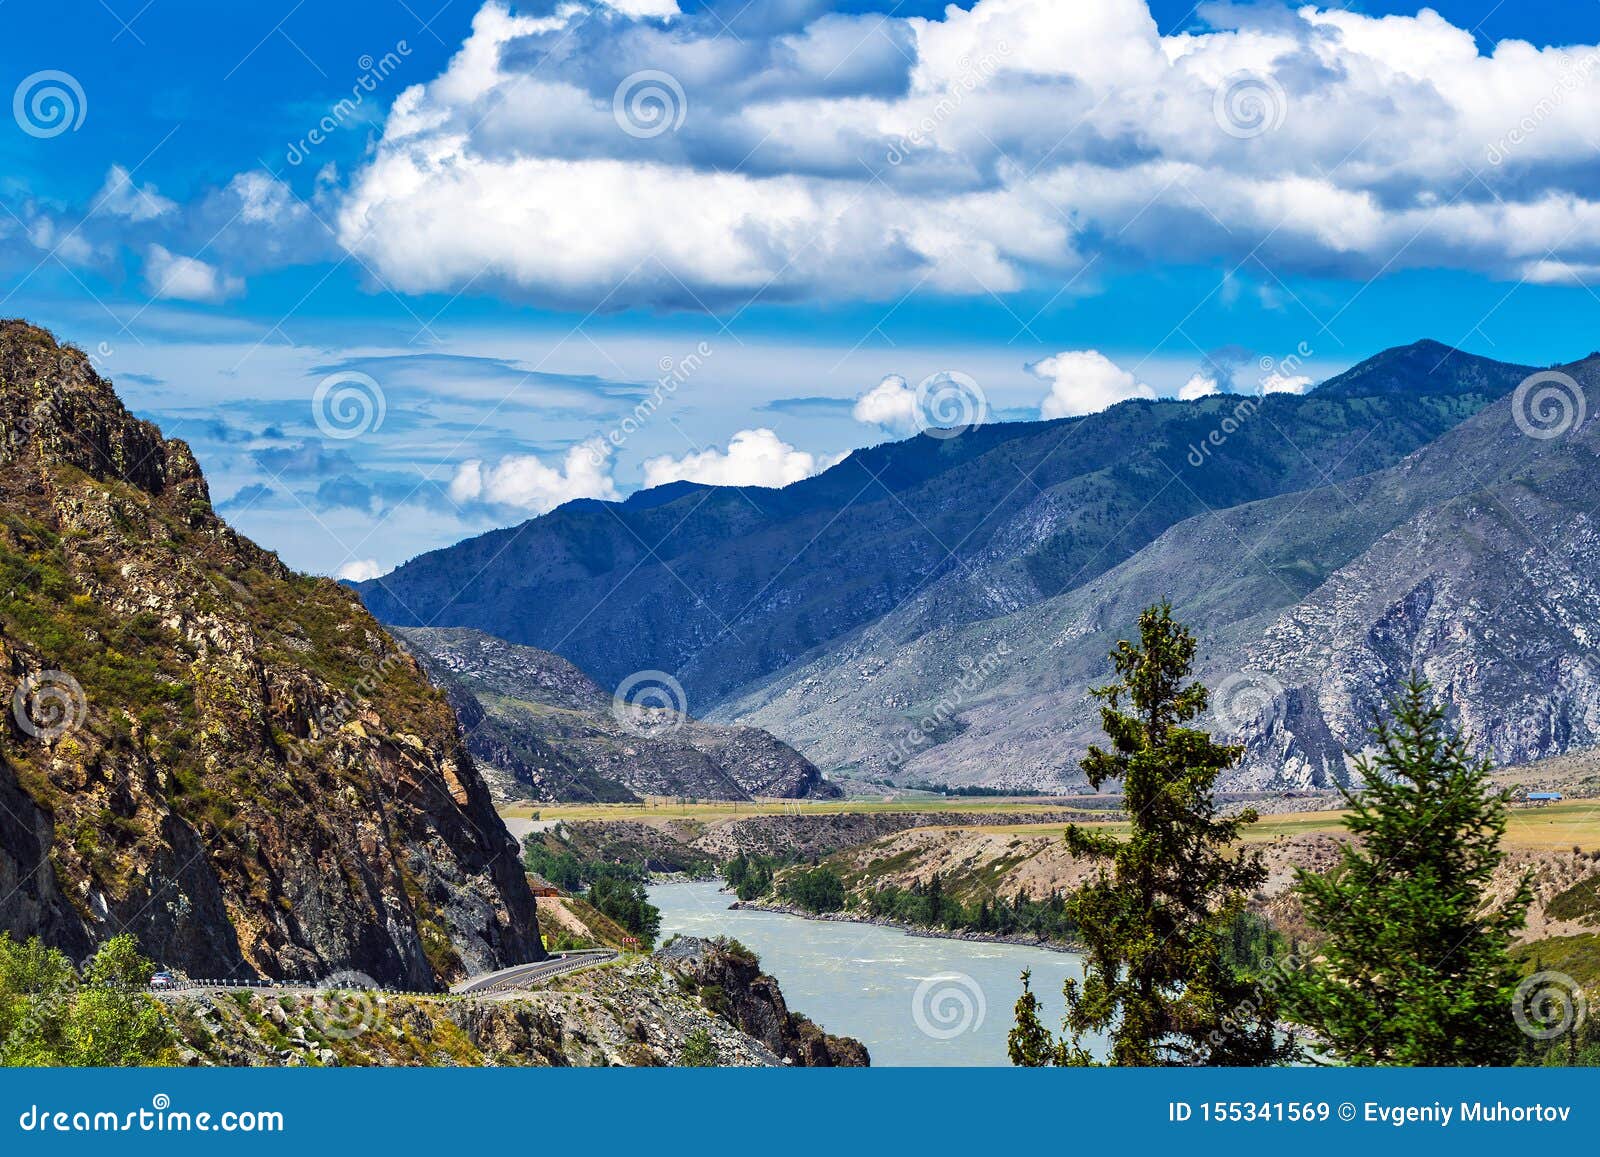 The River Katun Gorny Altai Russia Stock Image Image Of Stone